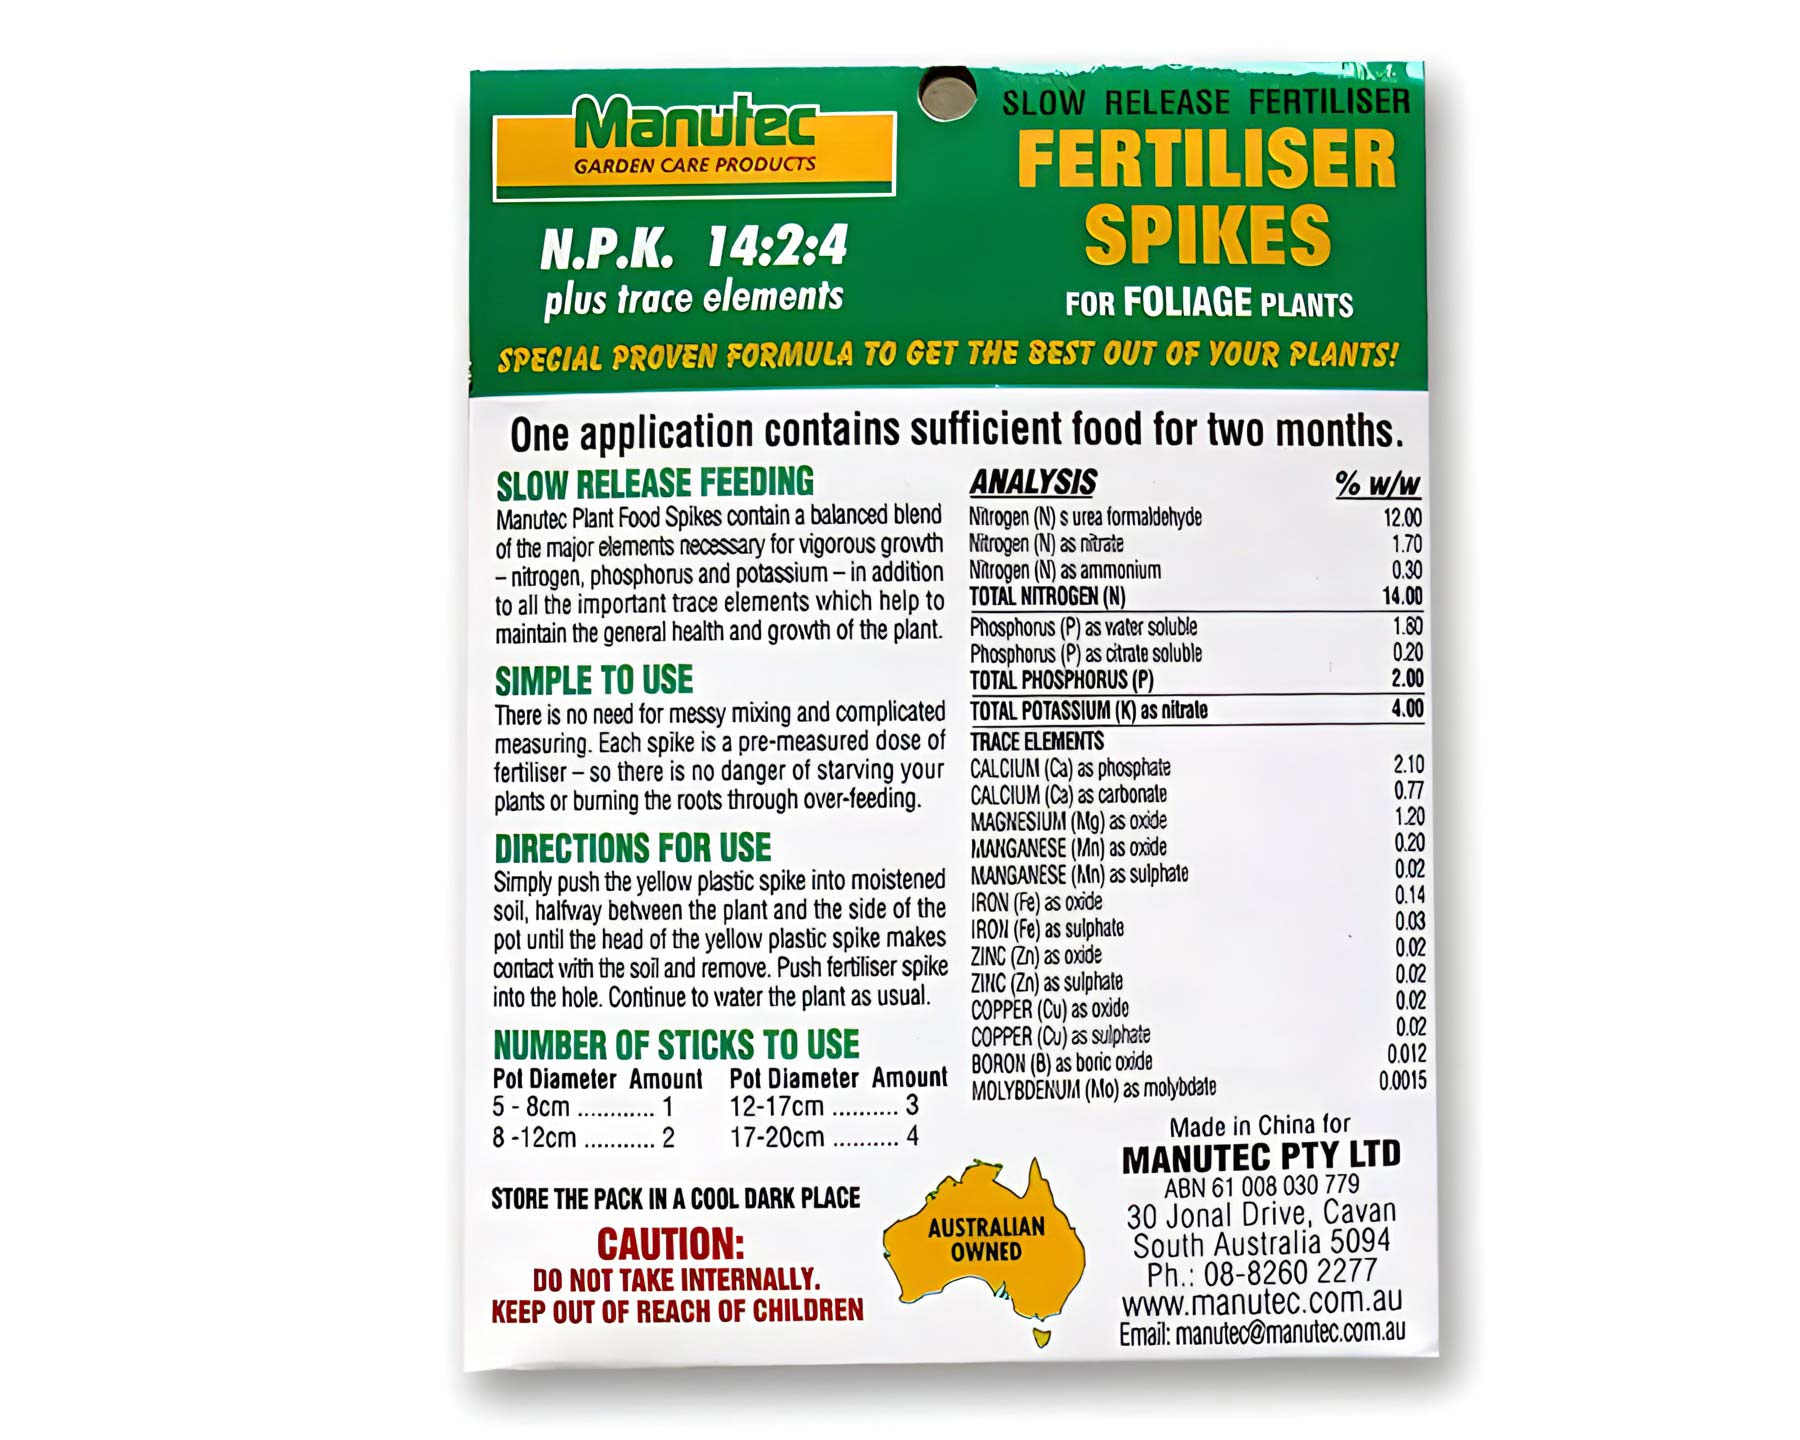 Manutec Fertiliser Spikes for Foliage, package rear panel